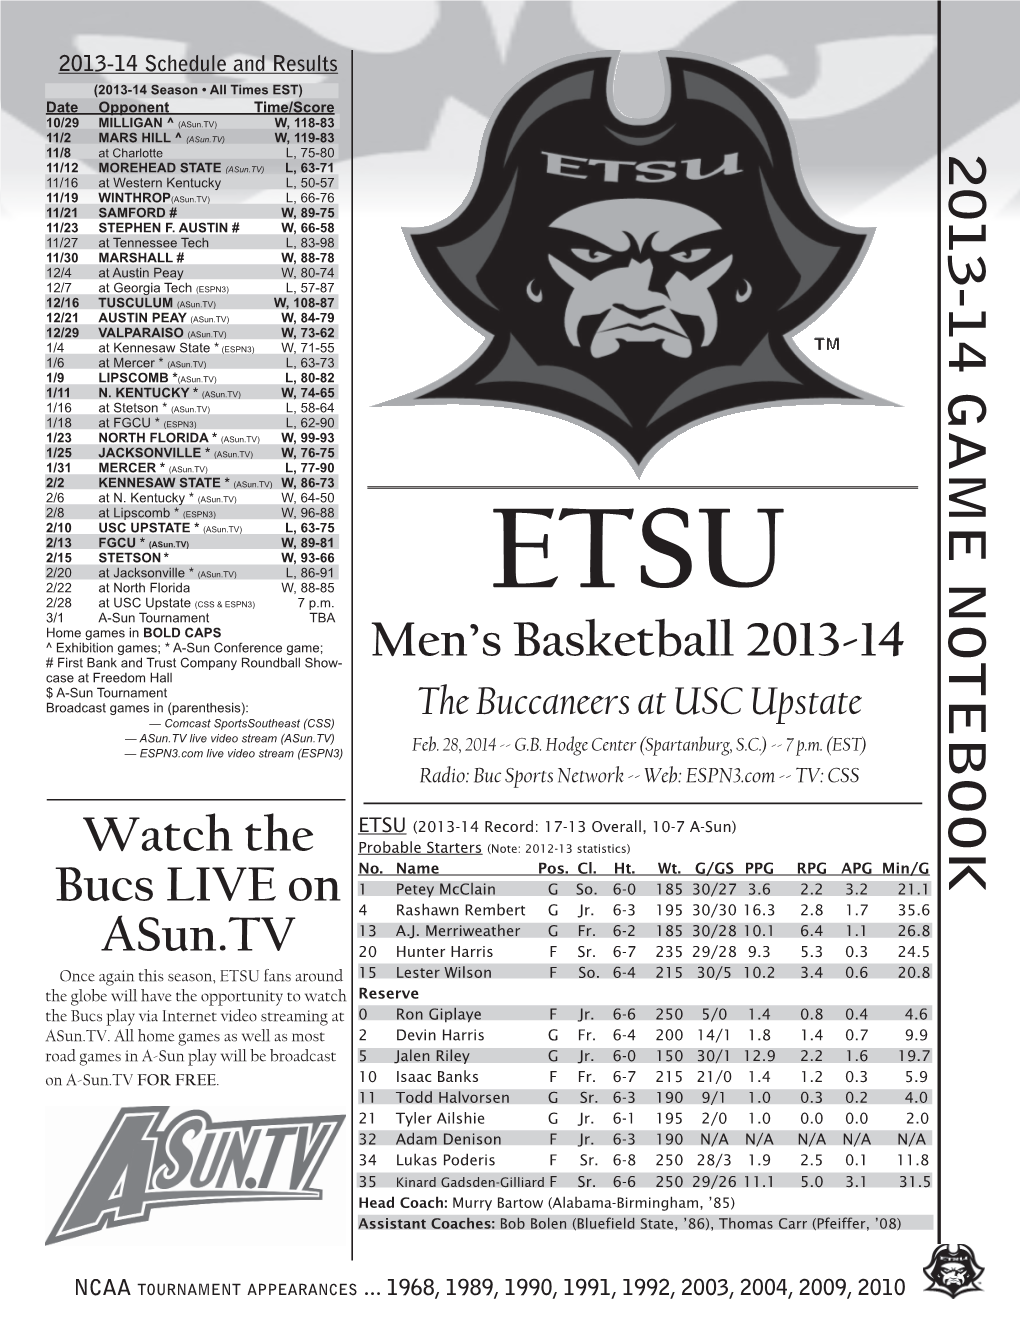 ETSU Vs. USC Upstate Game Notes